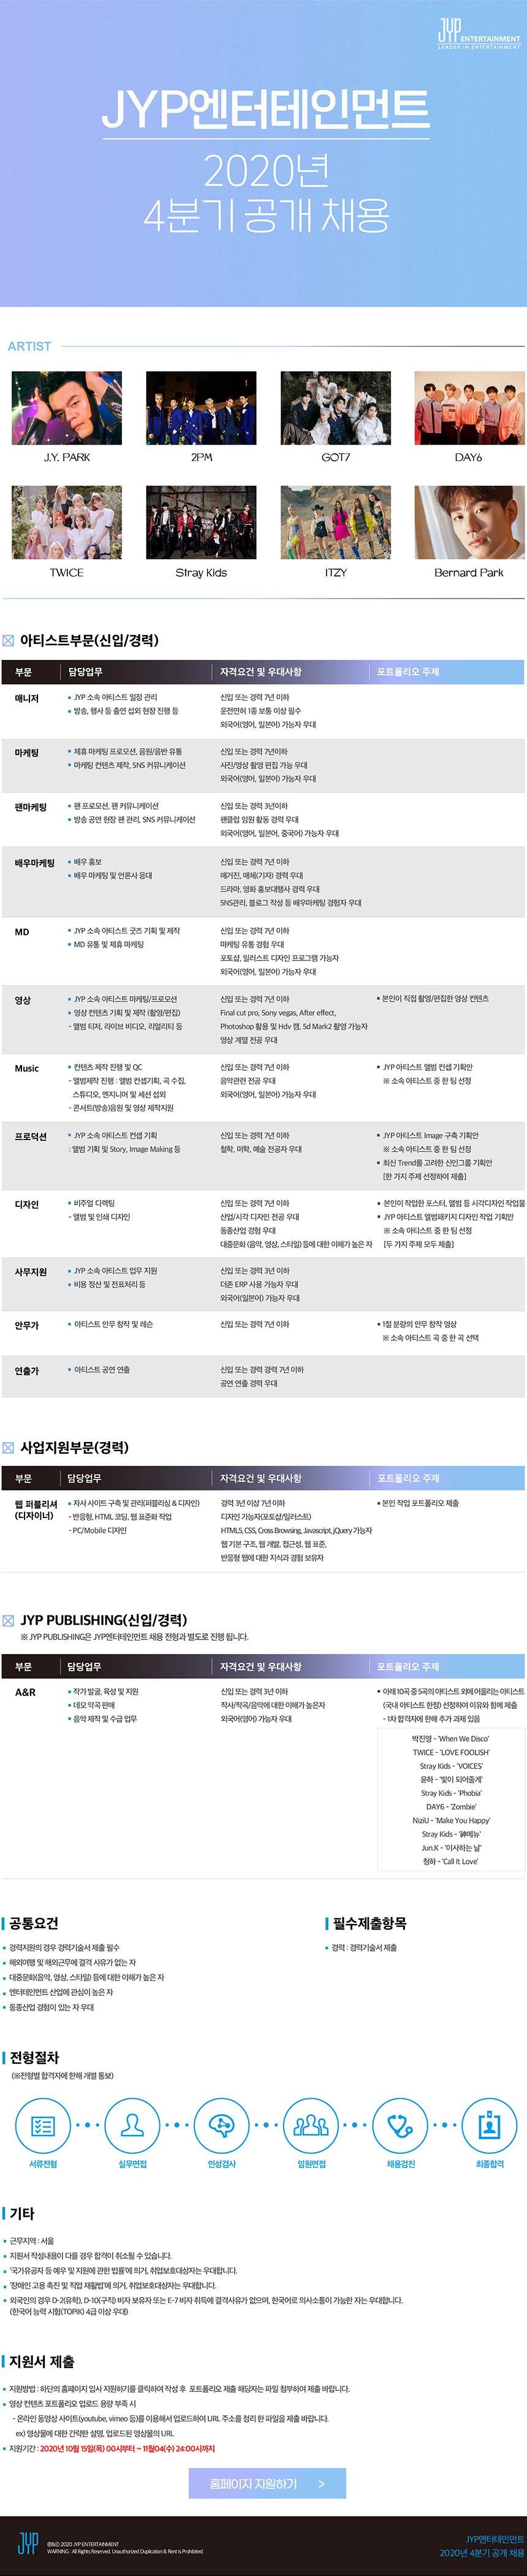 JYP엔터테인먼트 2020년 4분기 공개채용